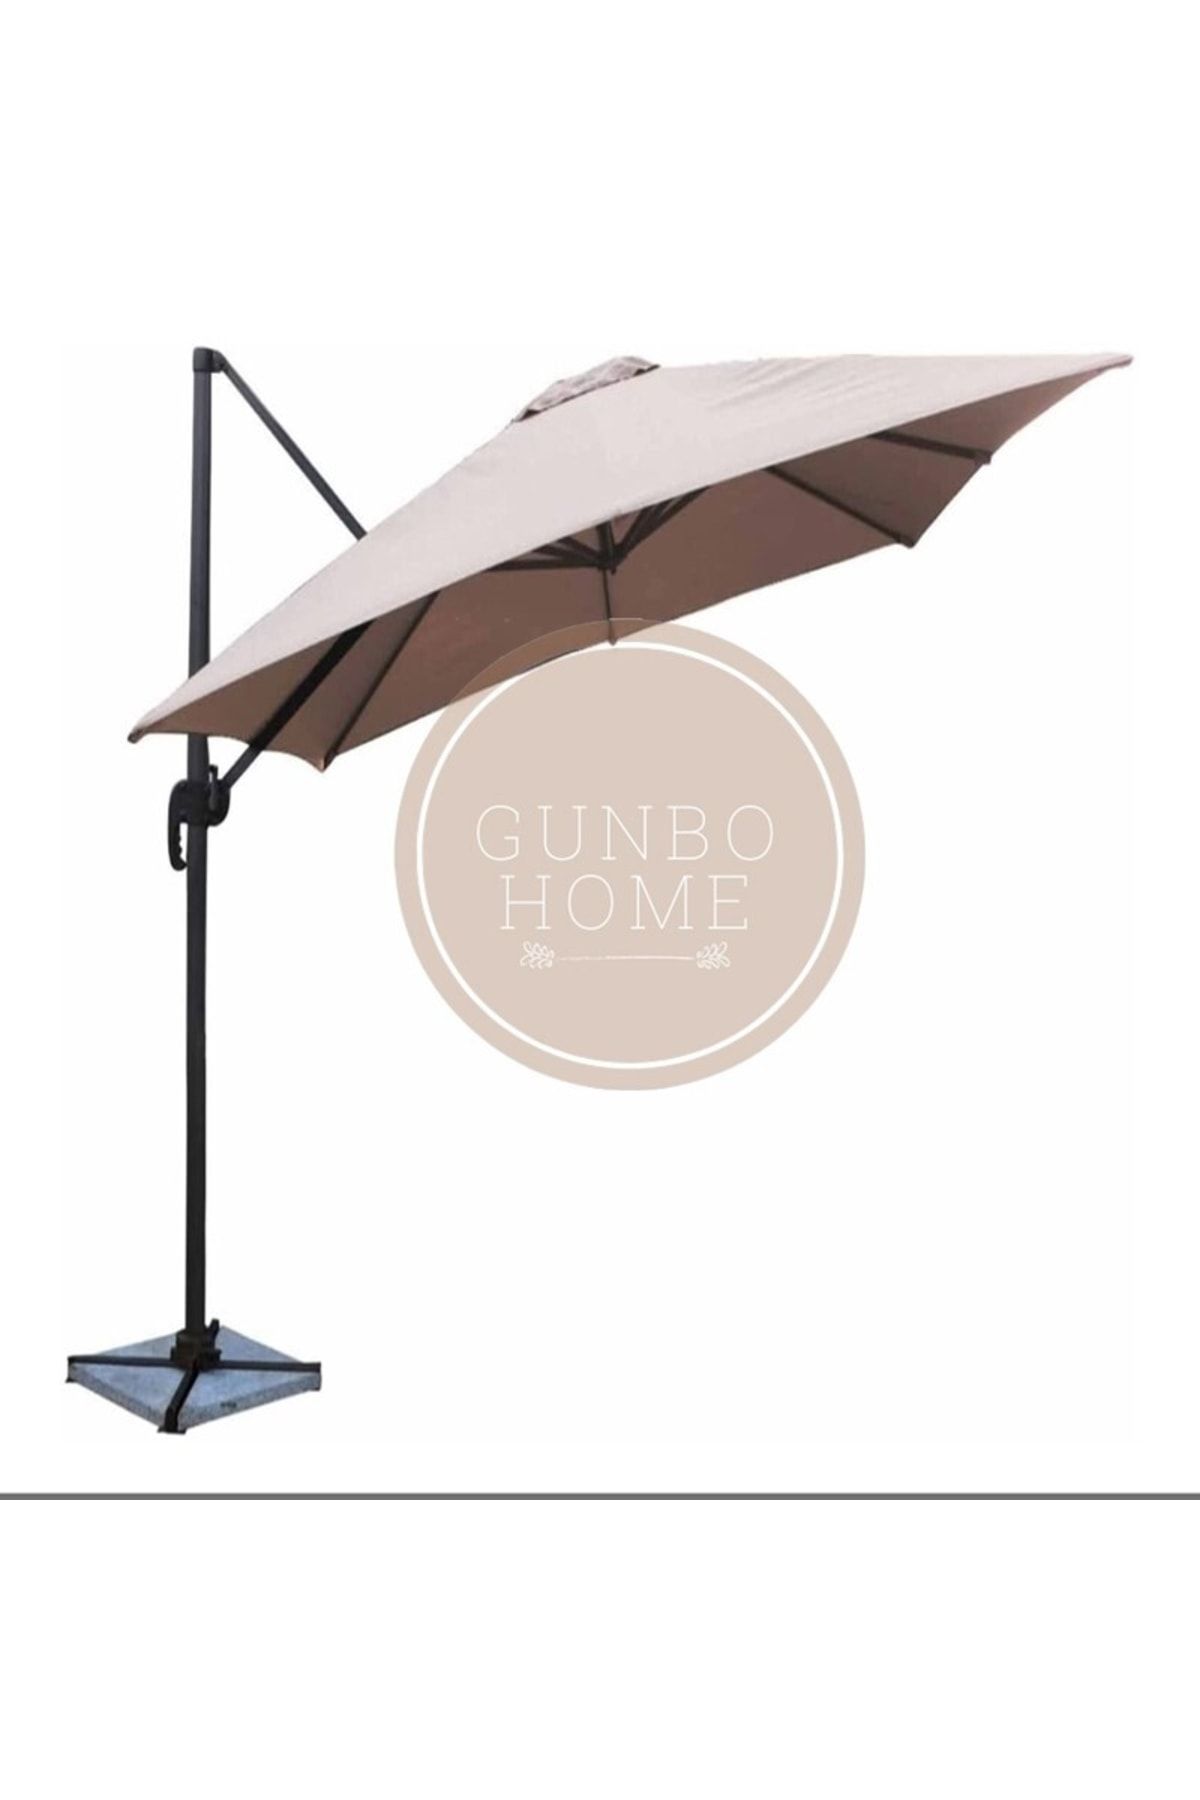 GUNBO HOME 3 X 3 Kare Dev Bahçe Şemsiyesi Tam Rpofesyonel Bahçe Şemsiyesi Teras Şemsiyesi Muz Şemsiye Ampul